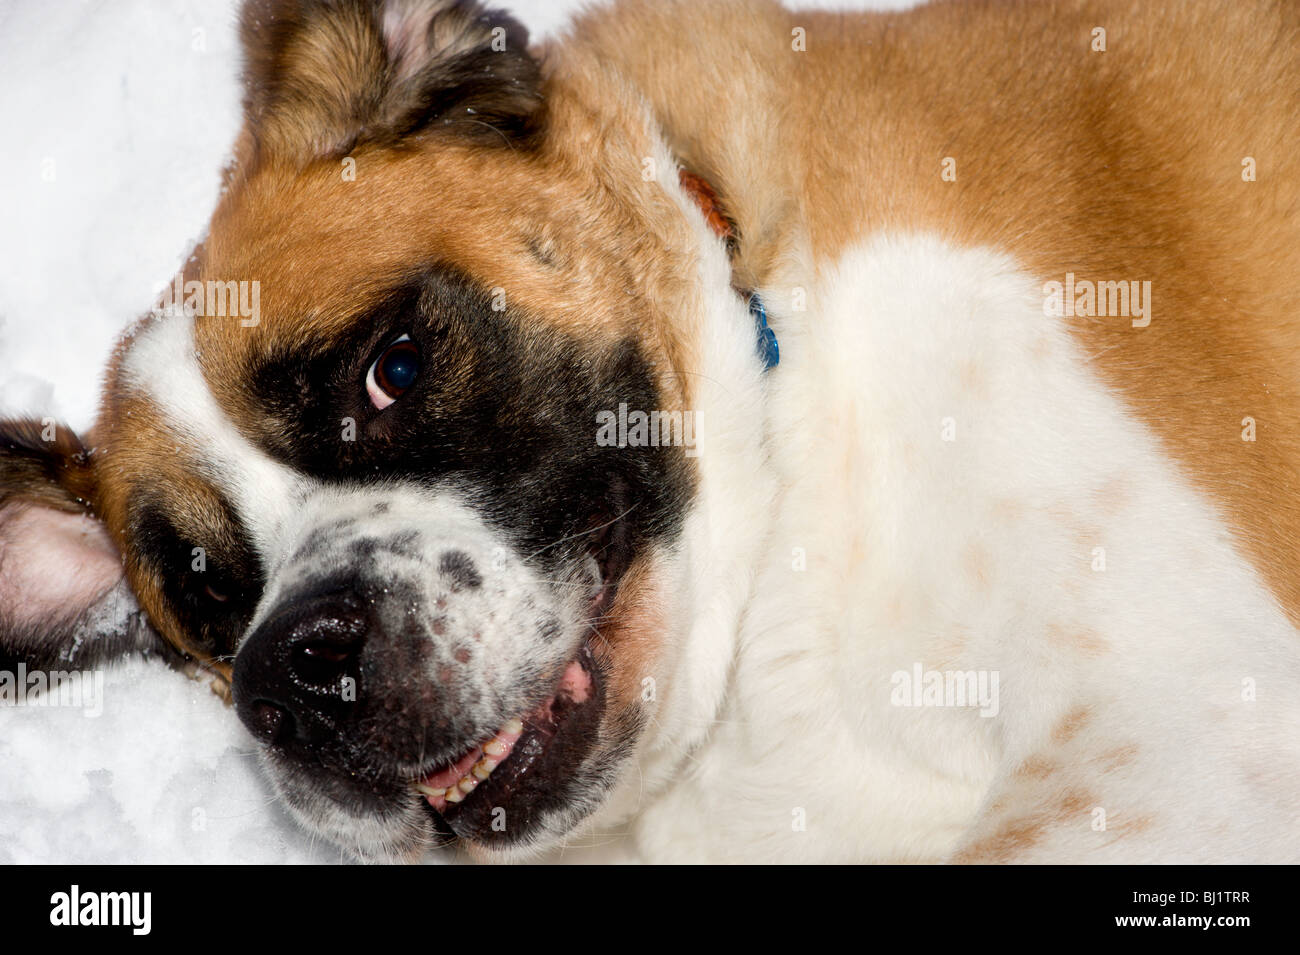 Saint Bernard Dog In Snow Stock Photos Saint Bernard Dog In Snow